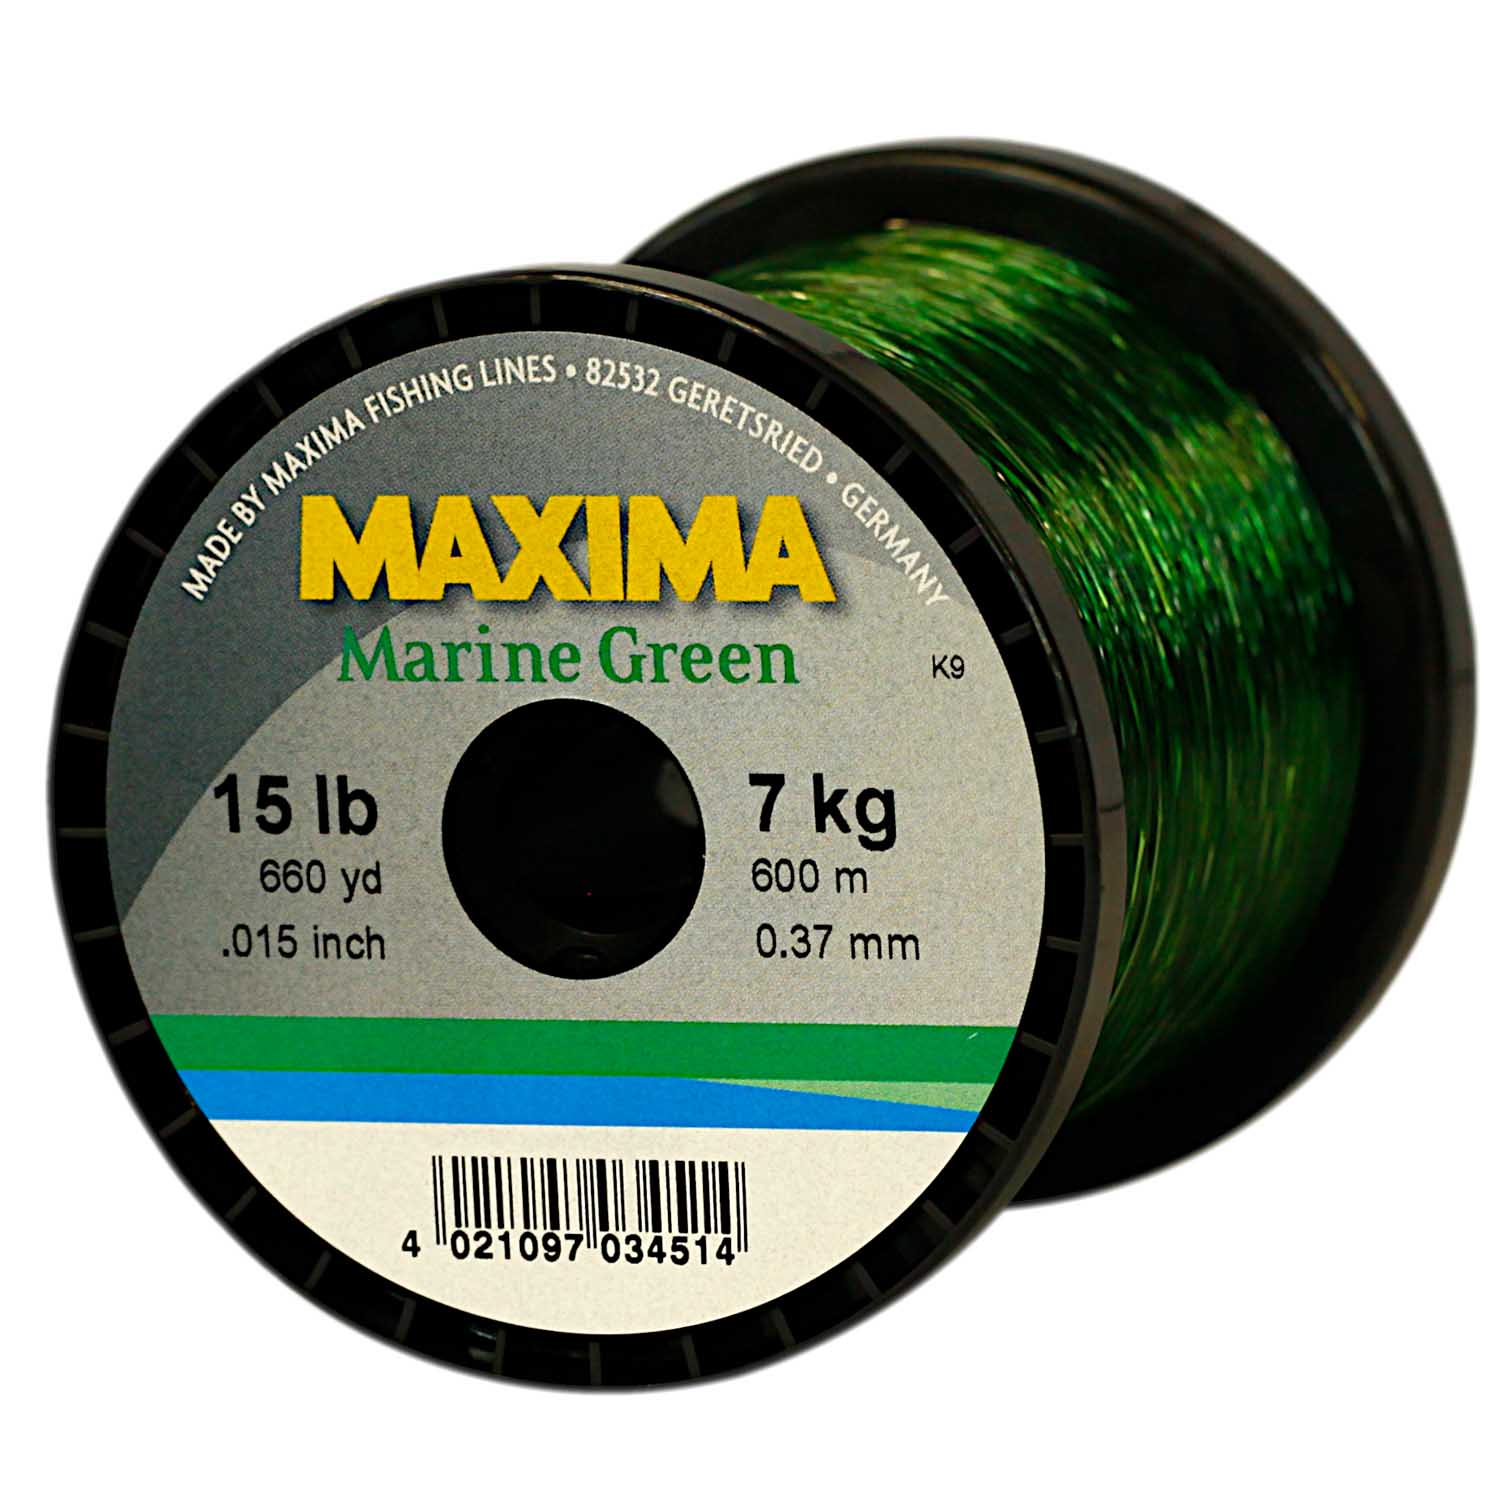 Maxima Nylon Fishing Line, 7KG/15LB 0.37MM, Colour Marine Green